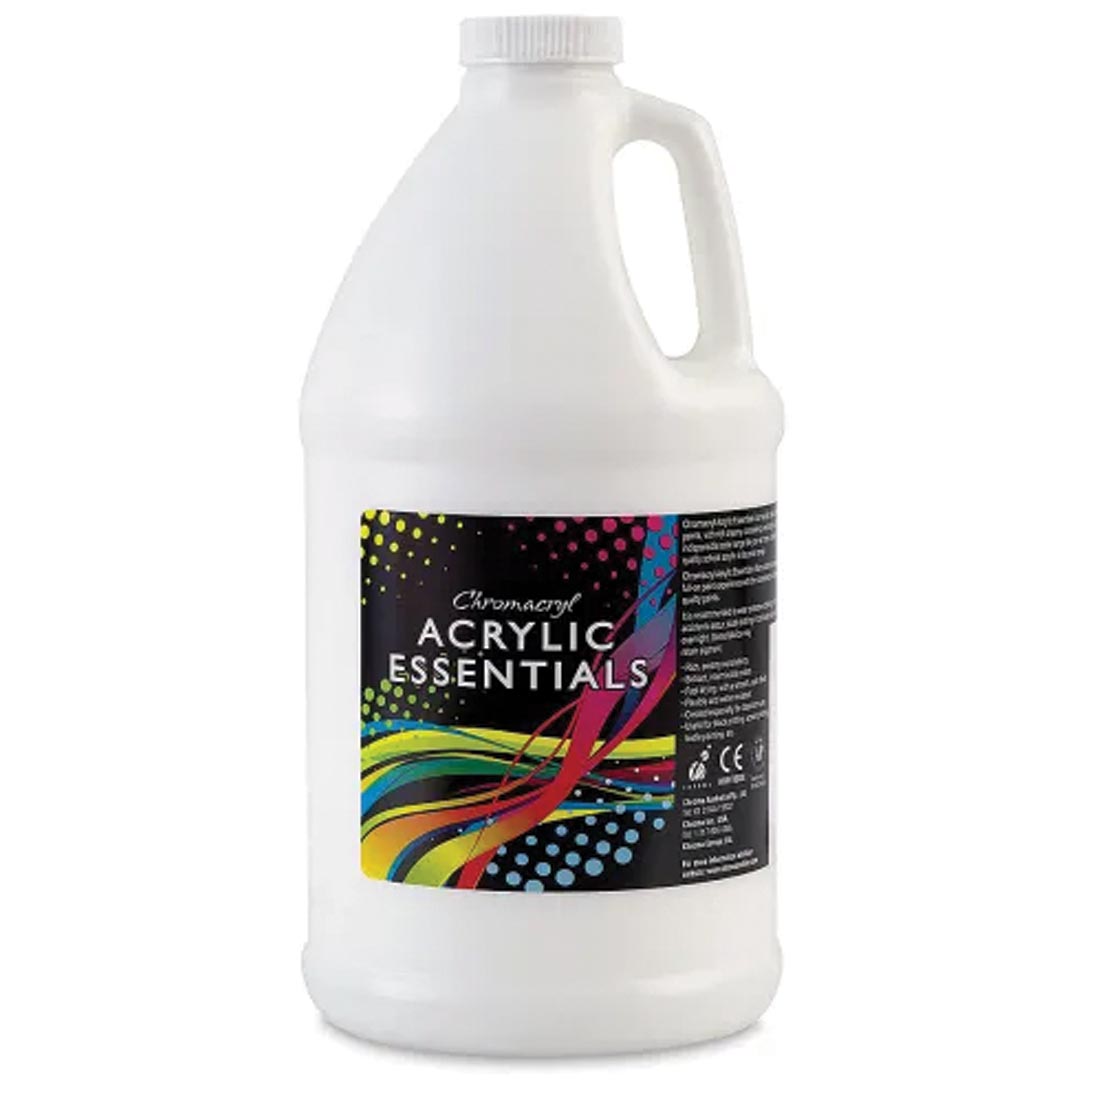 1/2 Gallon of White Chromacryl Acrylic Essentials Paint